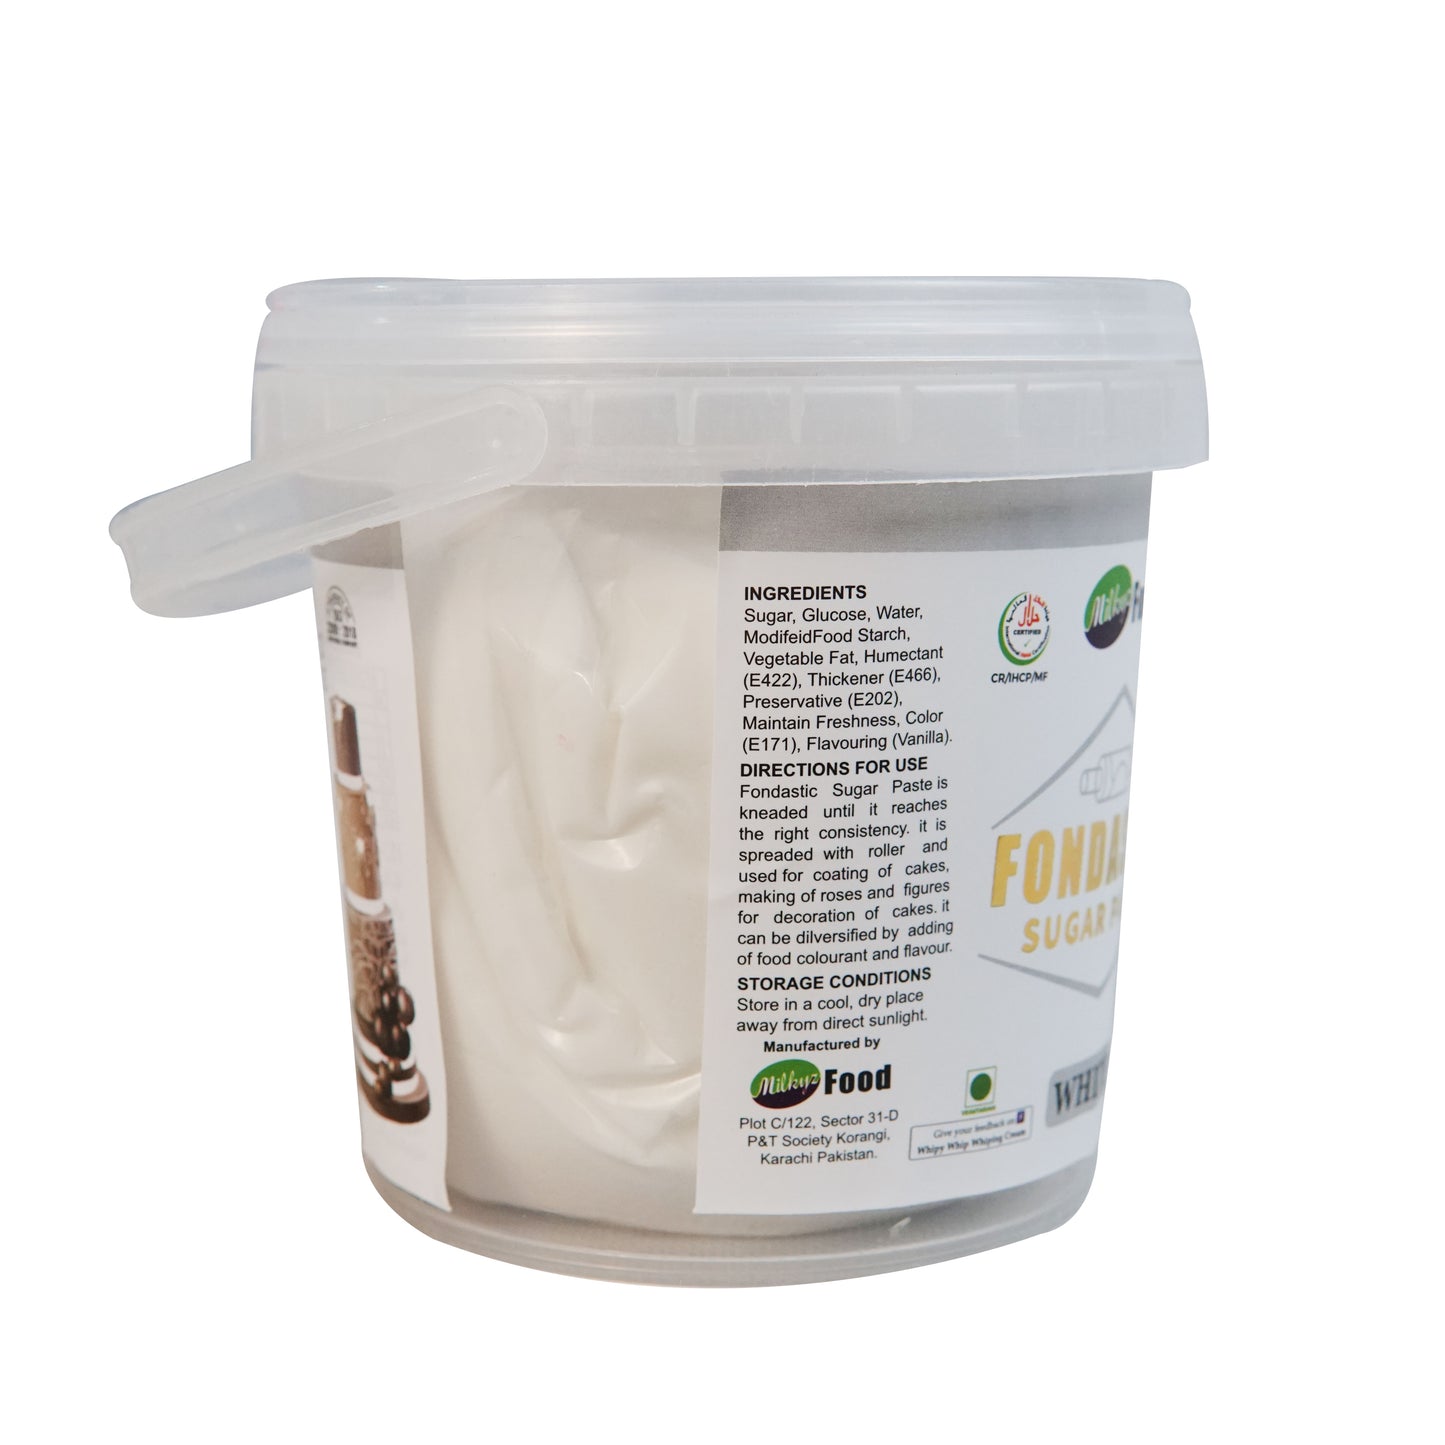 Milkyz Food Fondastic White Fondant Sugar Paste 500gm